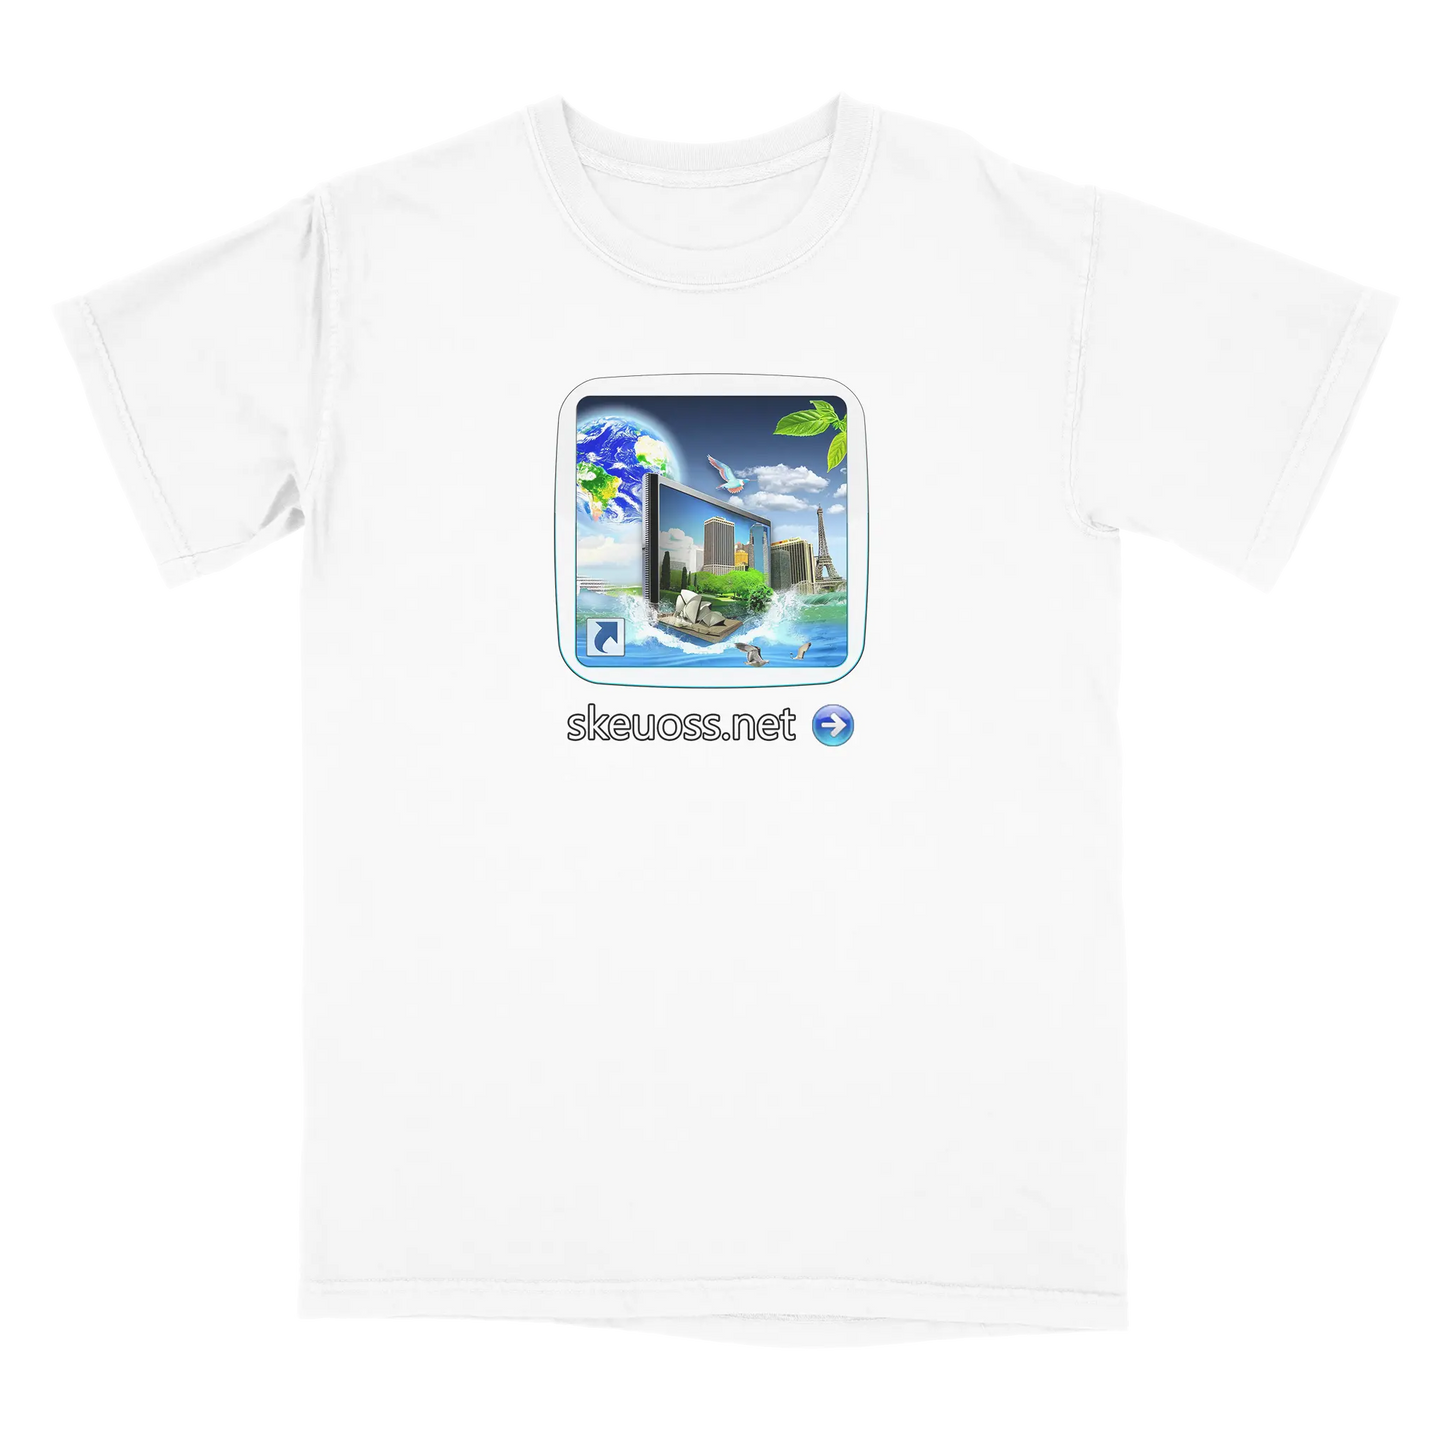 Frutiger Aero T-shirt - User Login Collection - User 177